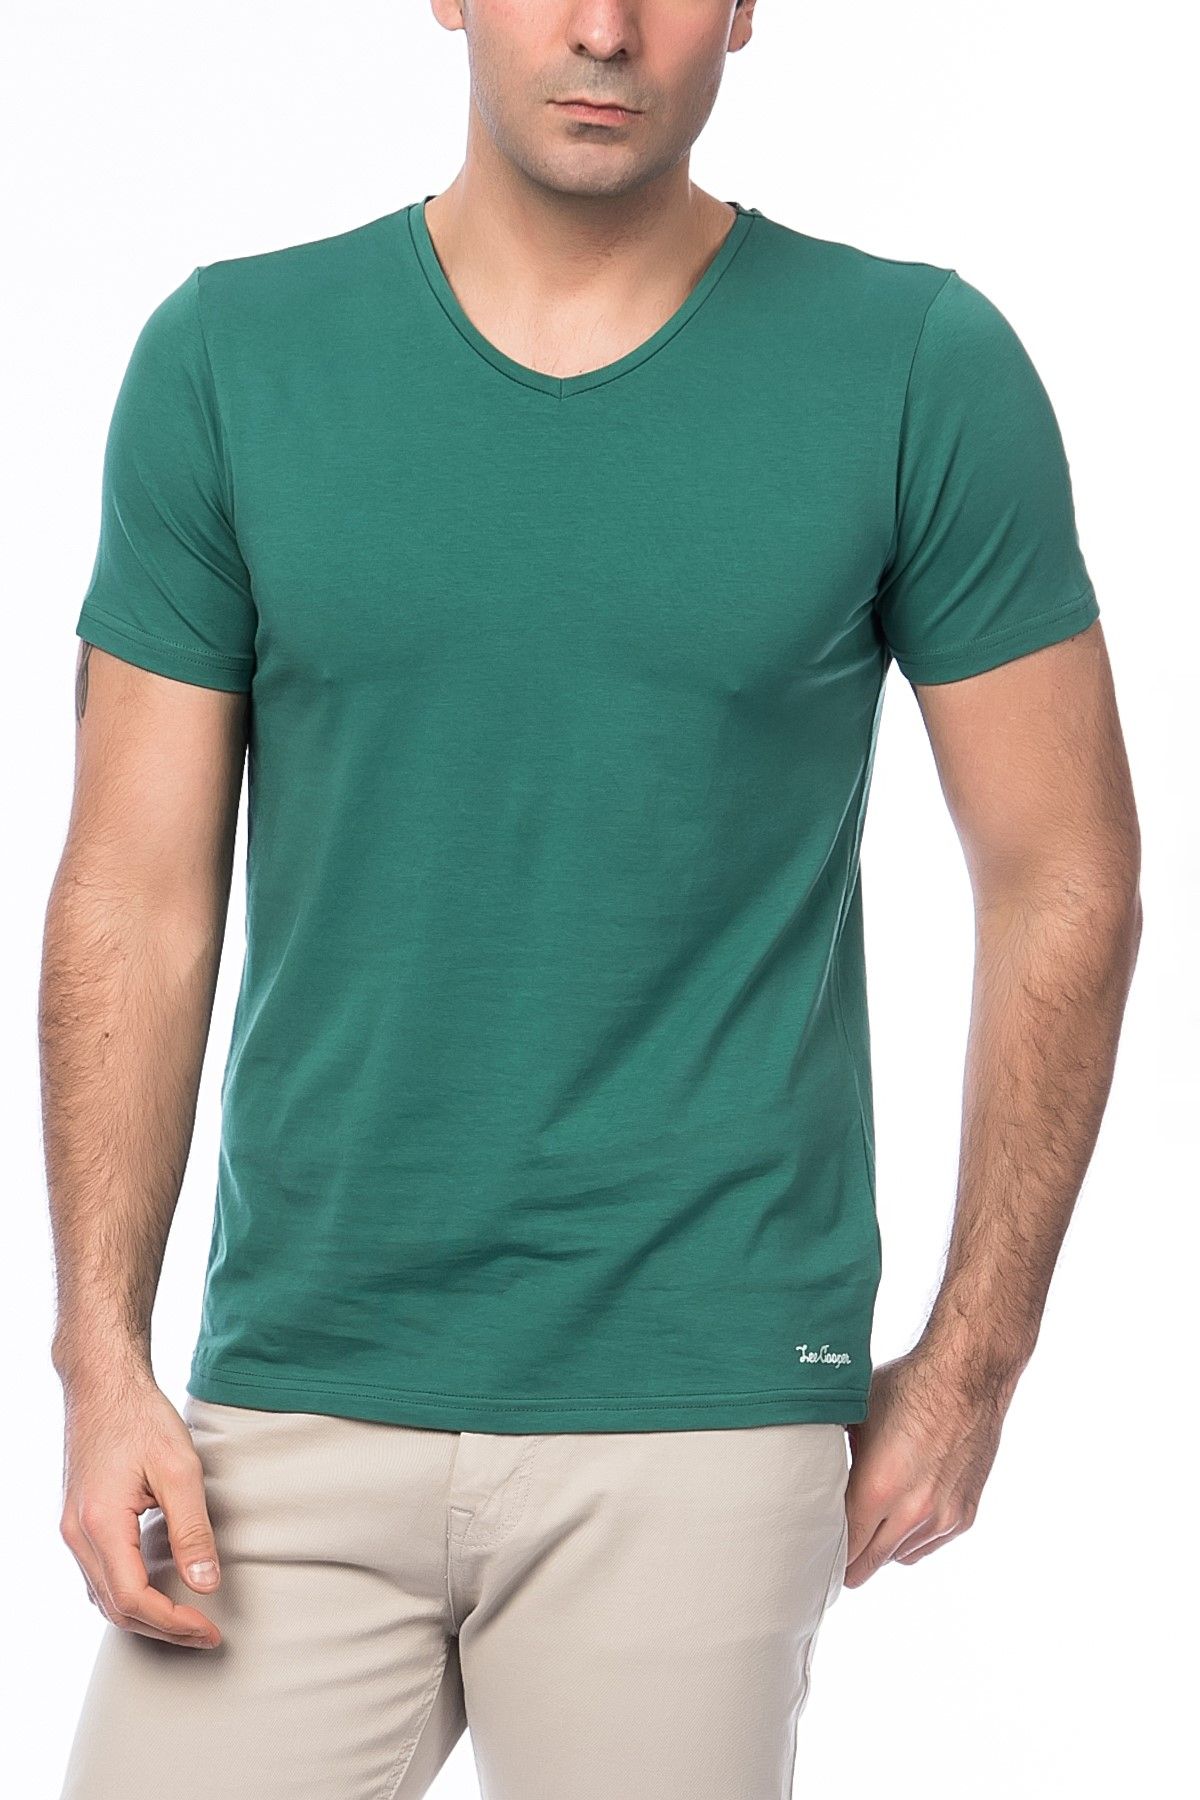 Lee Cooper Erkek Kaleb V Yaka T-Shirt Açik Yeşil 198 LCM 242002